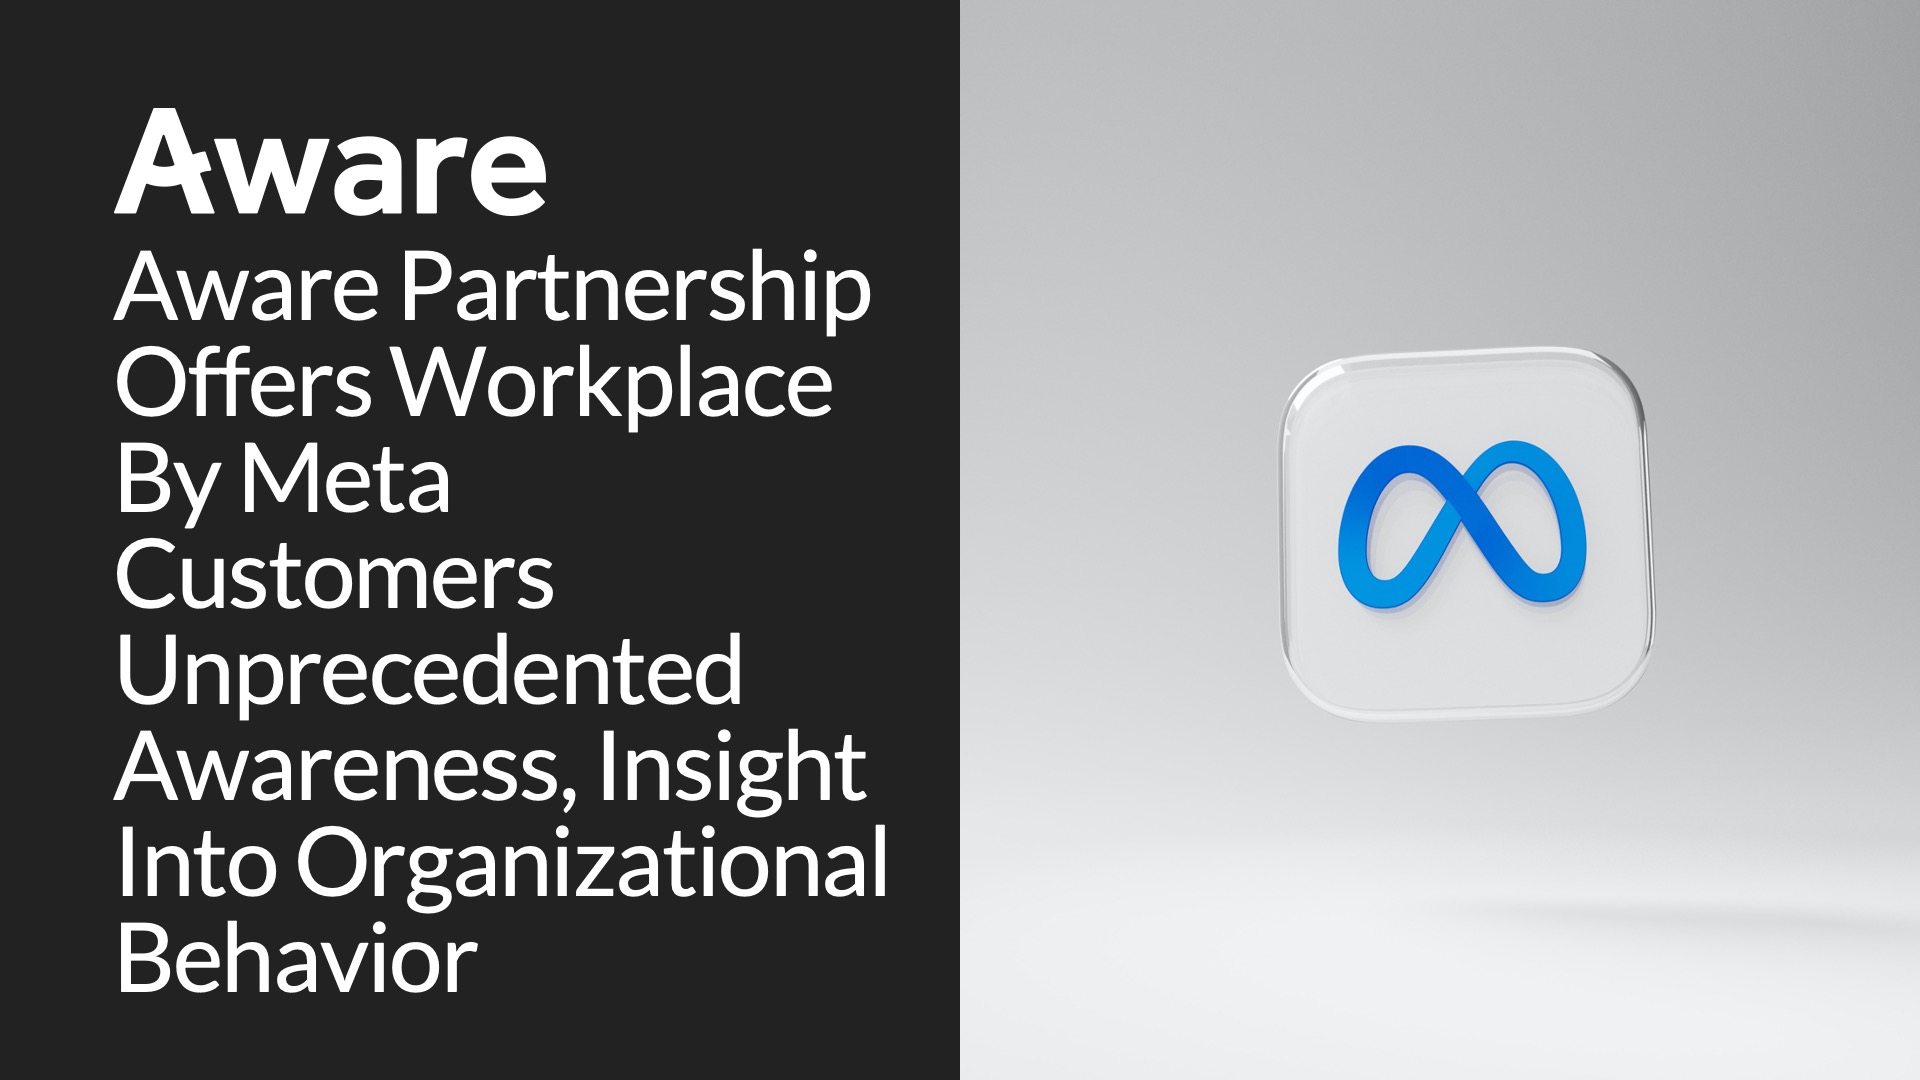 Aware Partnership Offers Workplace By Meta Customers Unprecedented Awareness, Insight Into Organizational Behavior